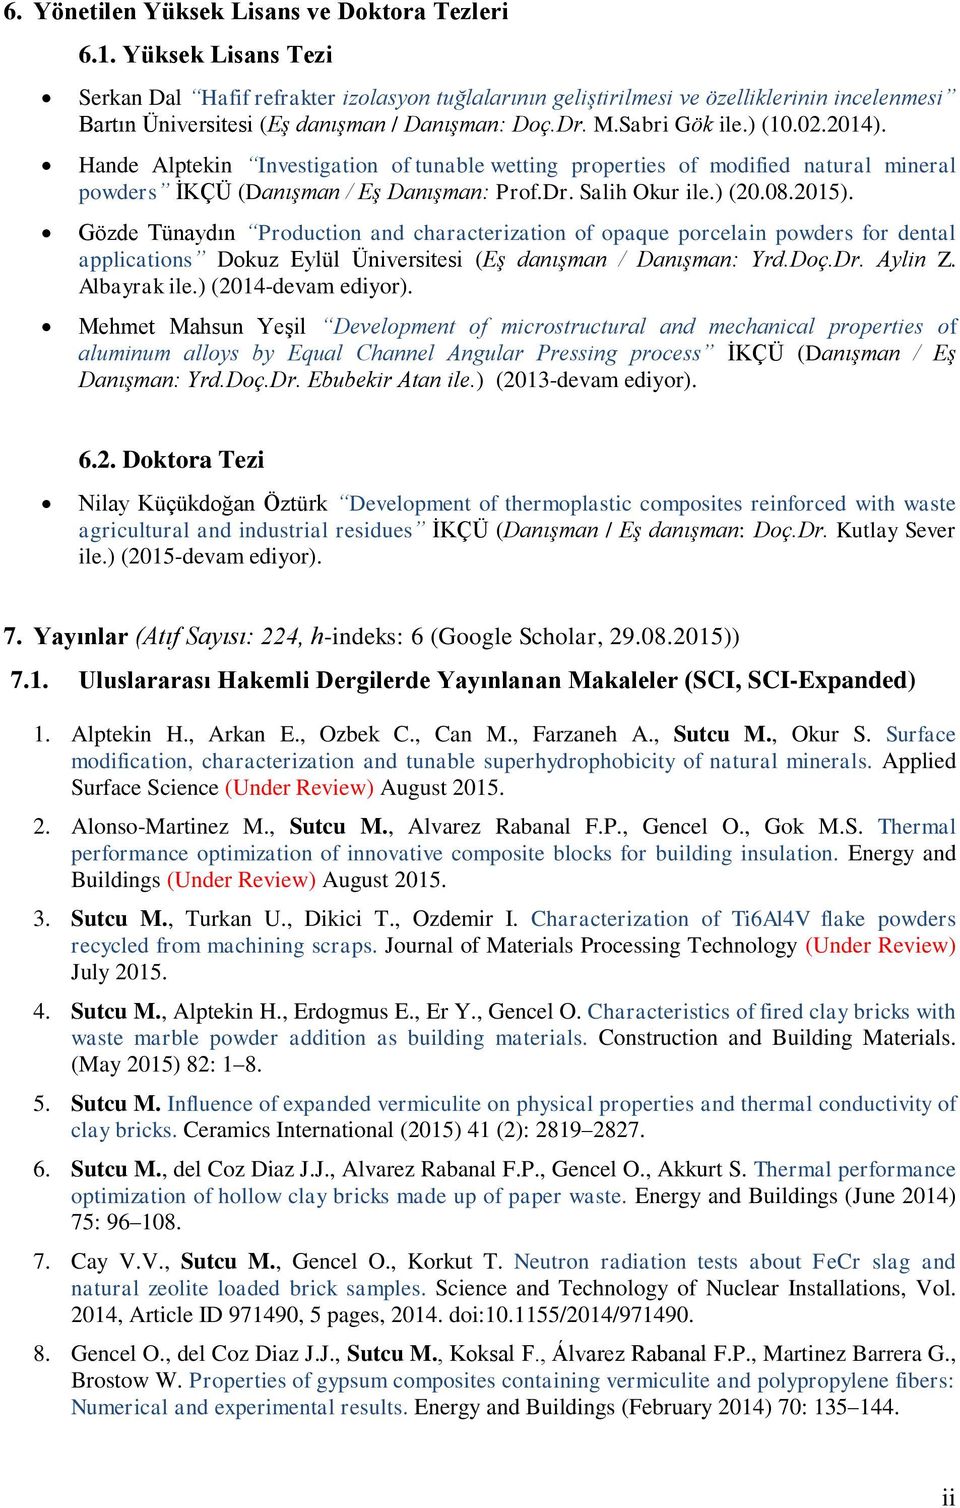 Hande Alptekin Investigation of tunable wetting properties of modified natural mineral powders İKÇÜ (Danışman / Eş Danışman: Prof.Dr. Salih Okur ile.) (20.08.2015).